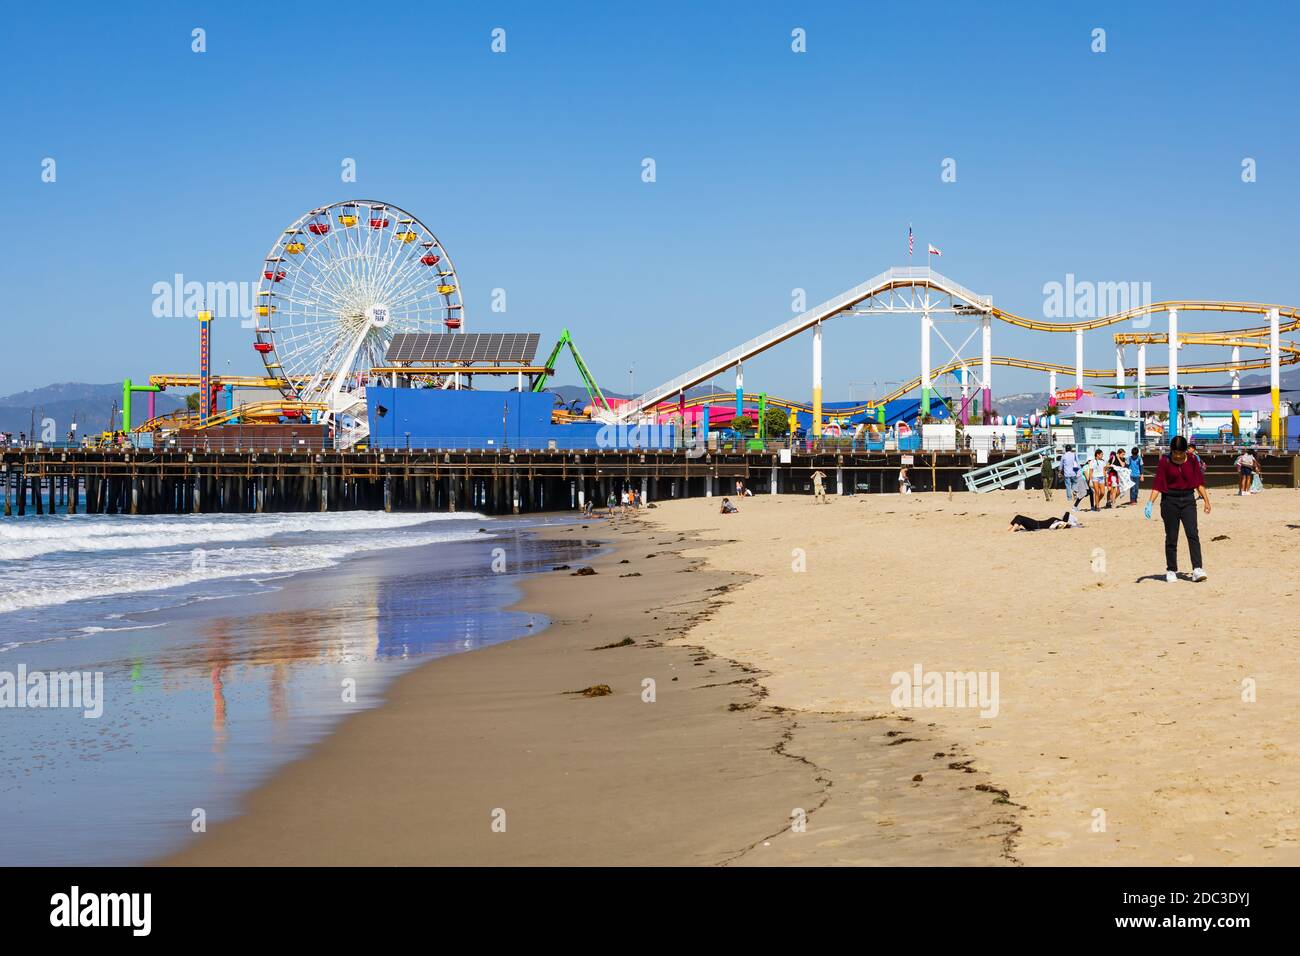 Pacific Park amusements. Roller coaster and big wheel. Santa Monica Pier and beach, Santa Monica, California, United States of America Stock Photo